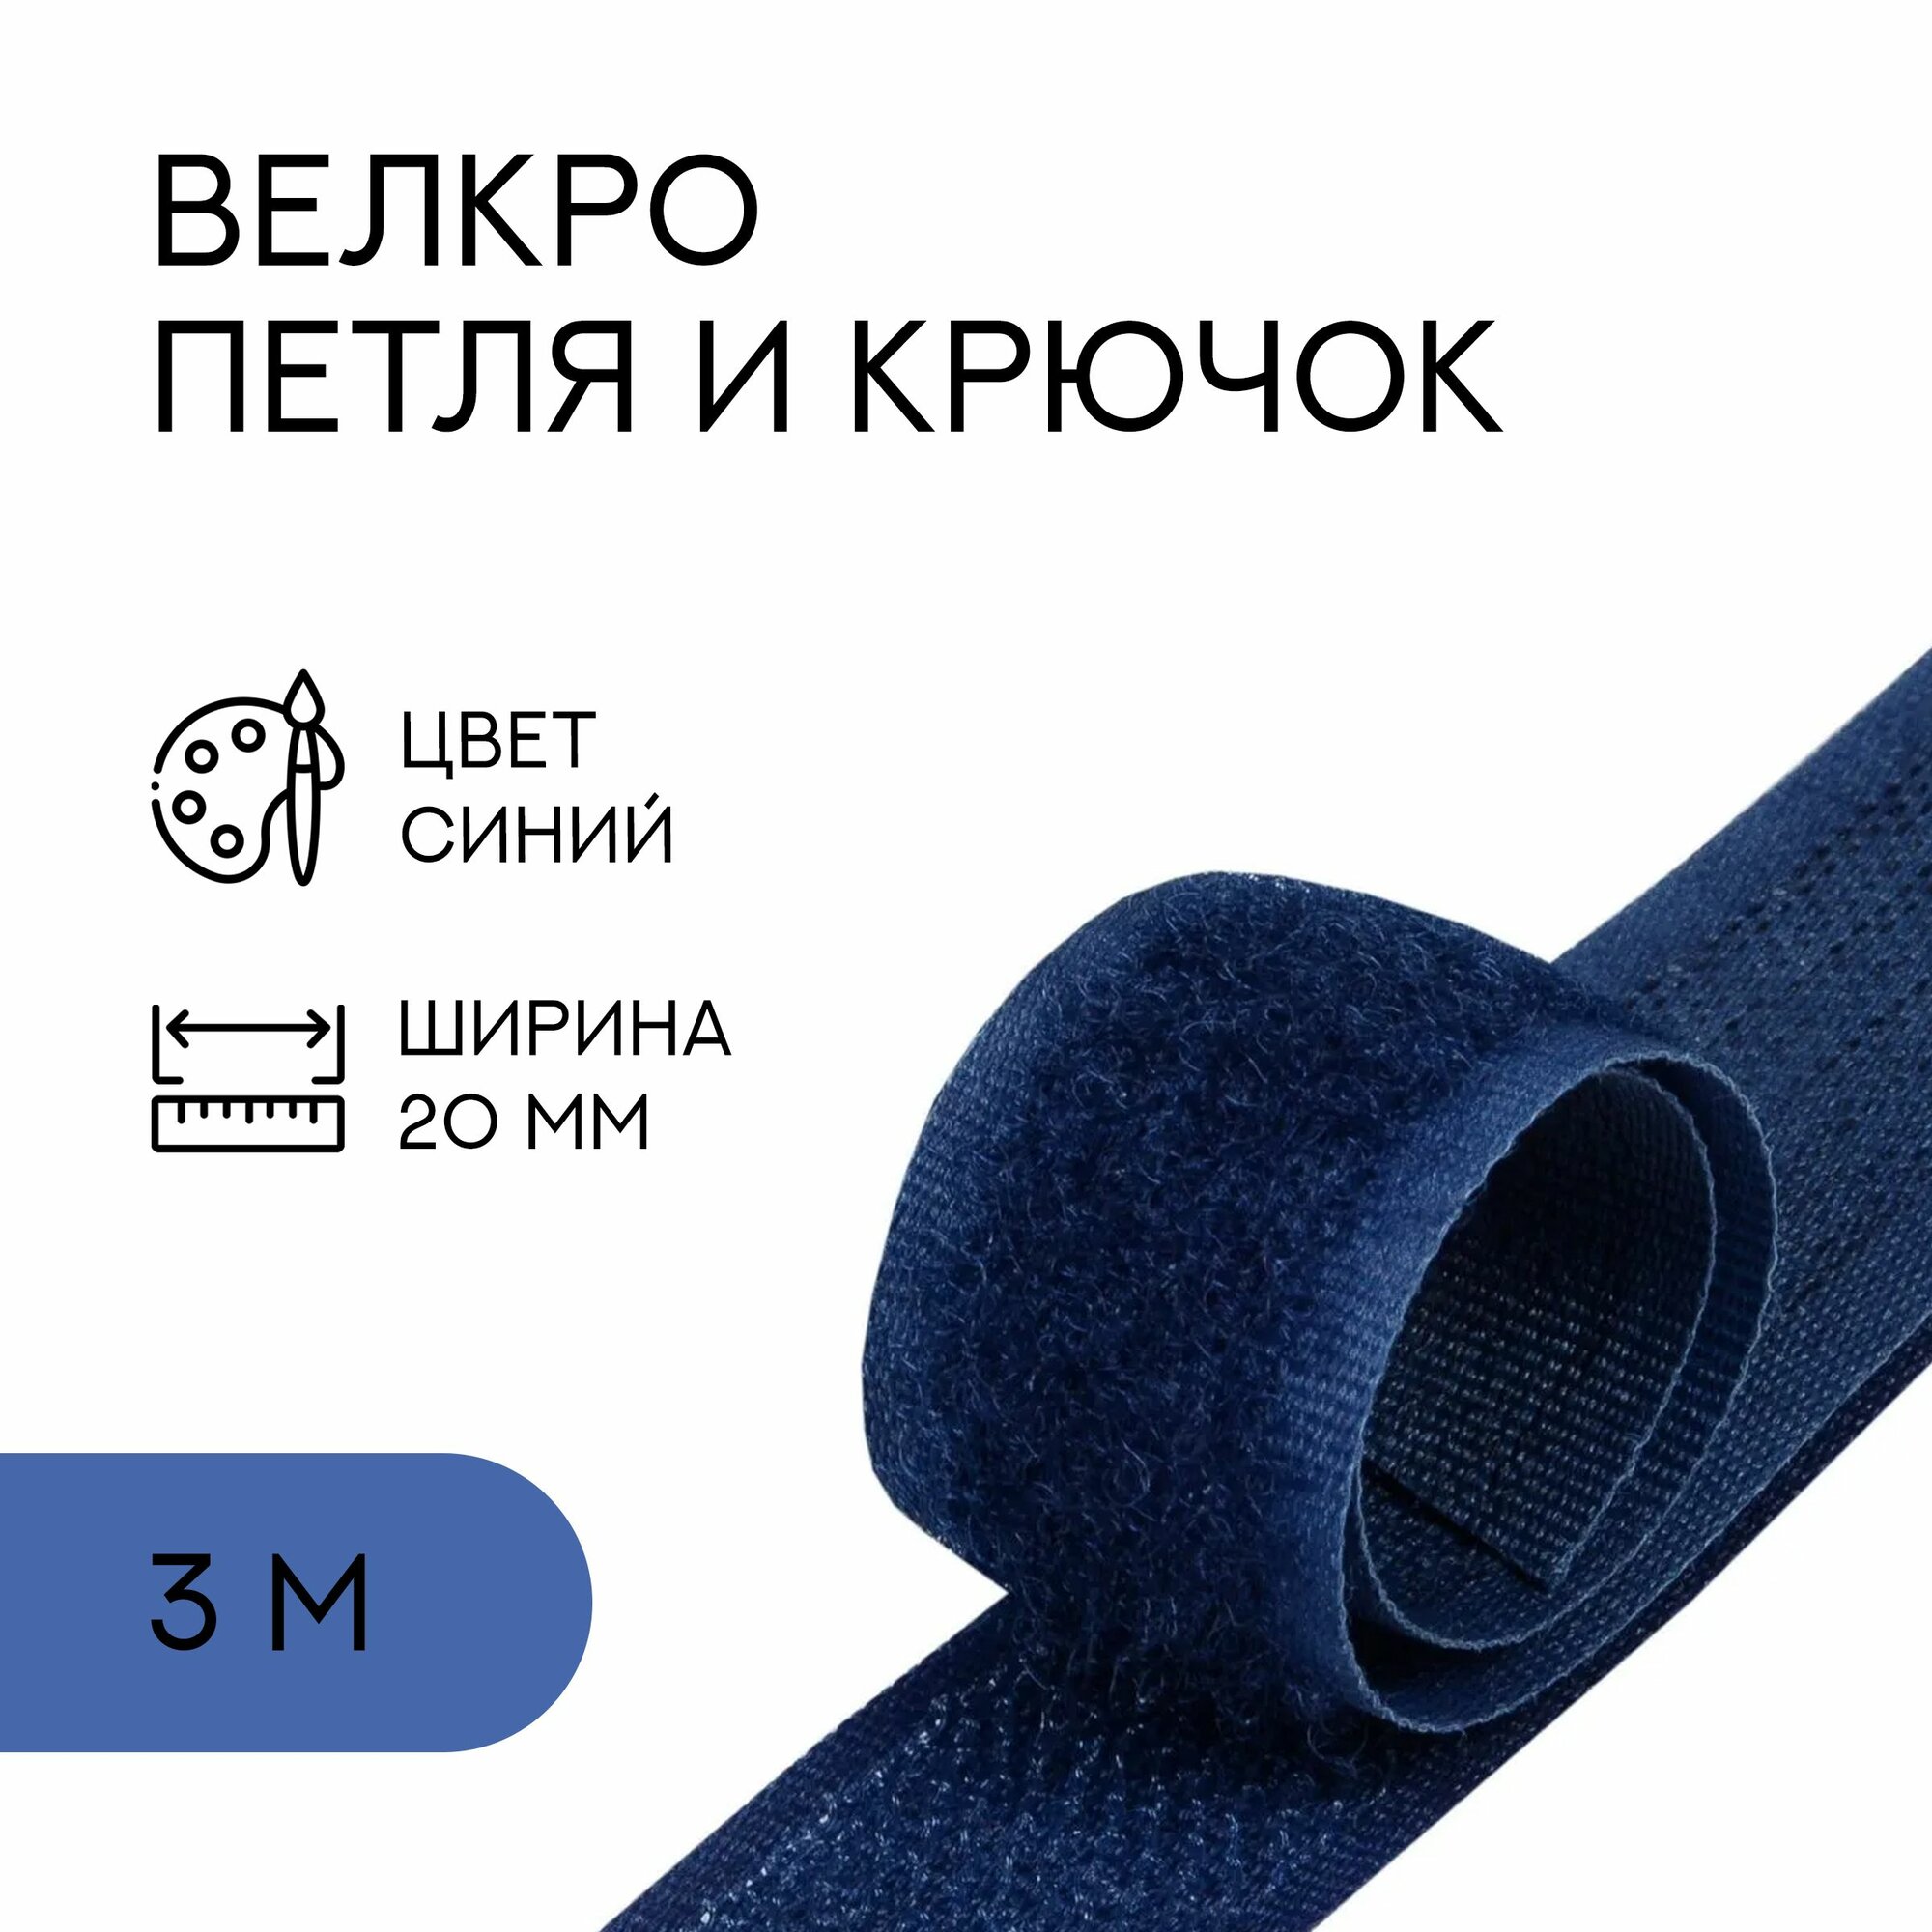 Велкро комплект (петля и крючок) / лента контактная липучка, 20 мм, синий, 3 м